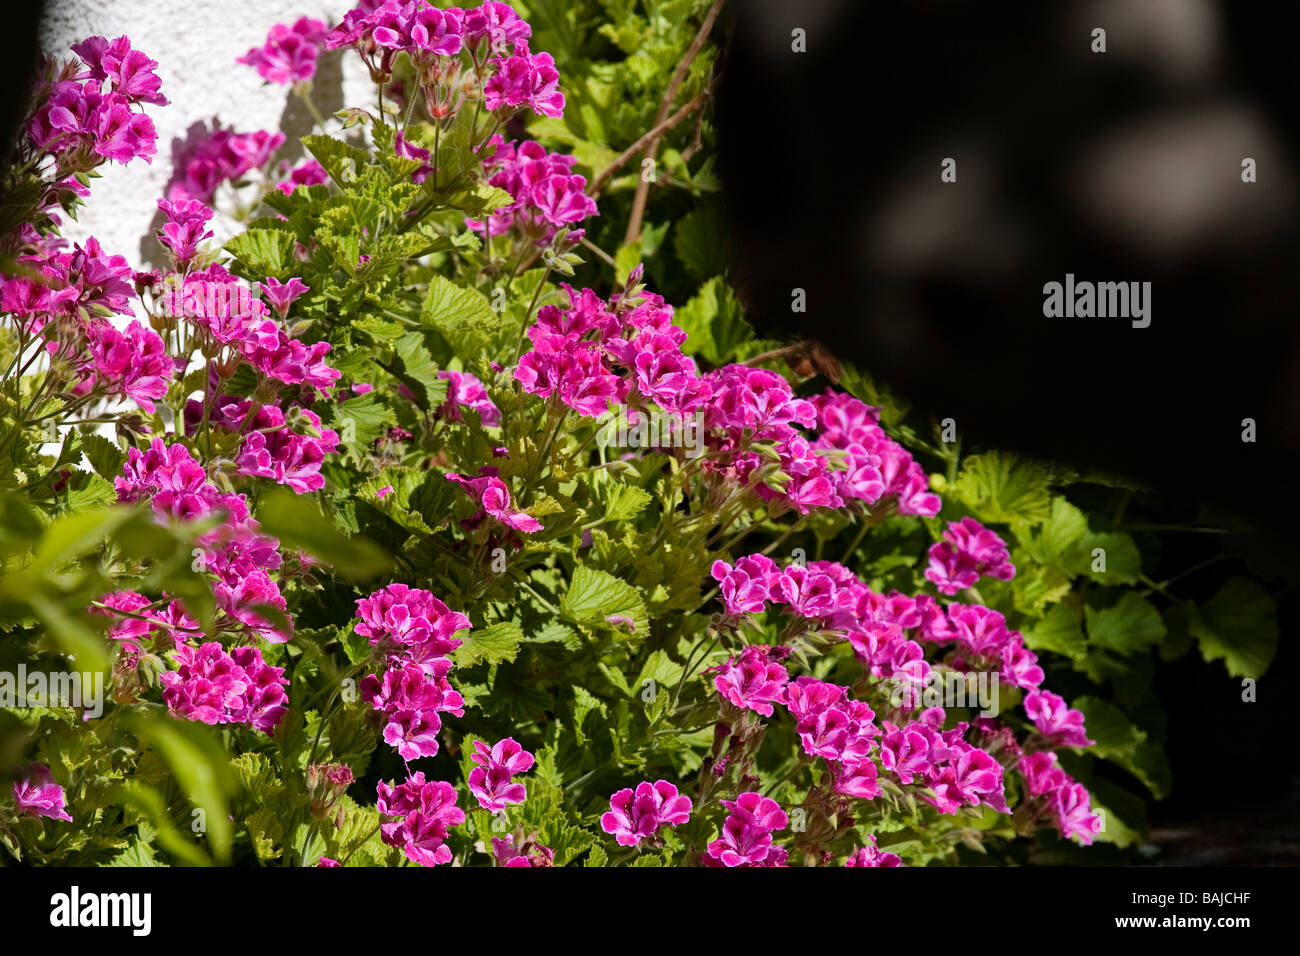 Planta y Flores de Geranio Plant and Flower Geranium Stock Photo